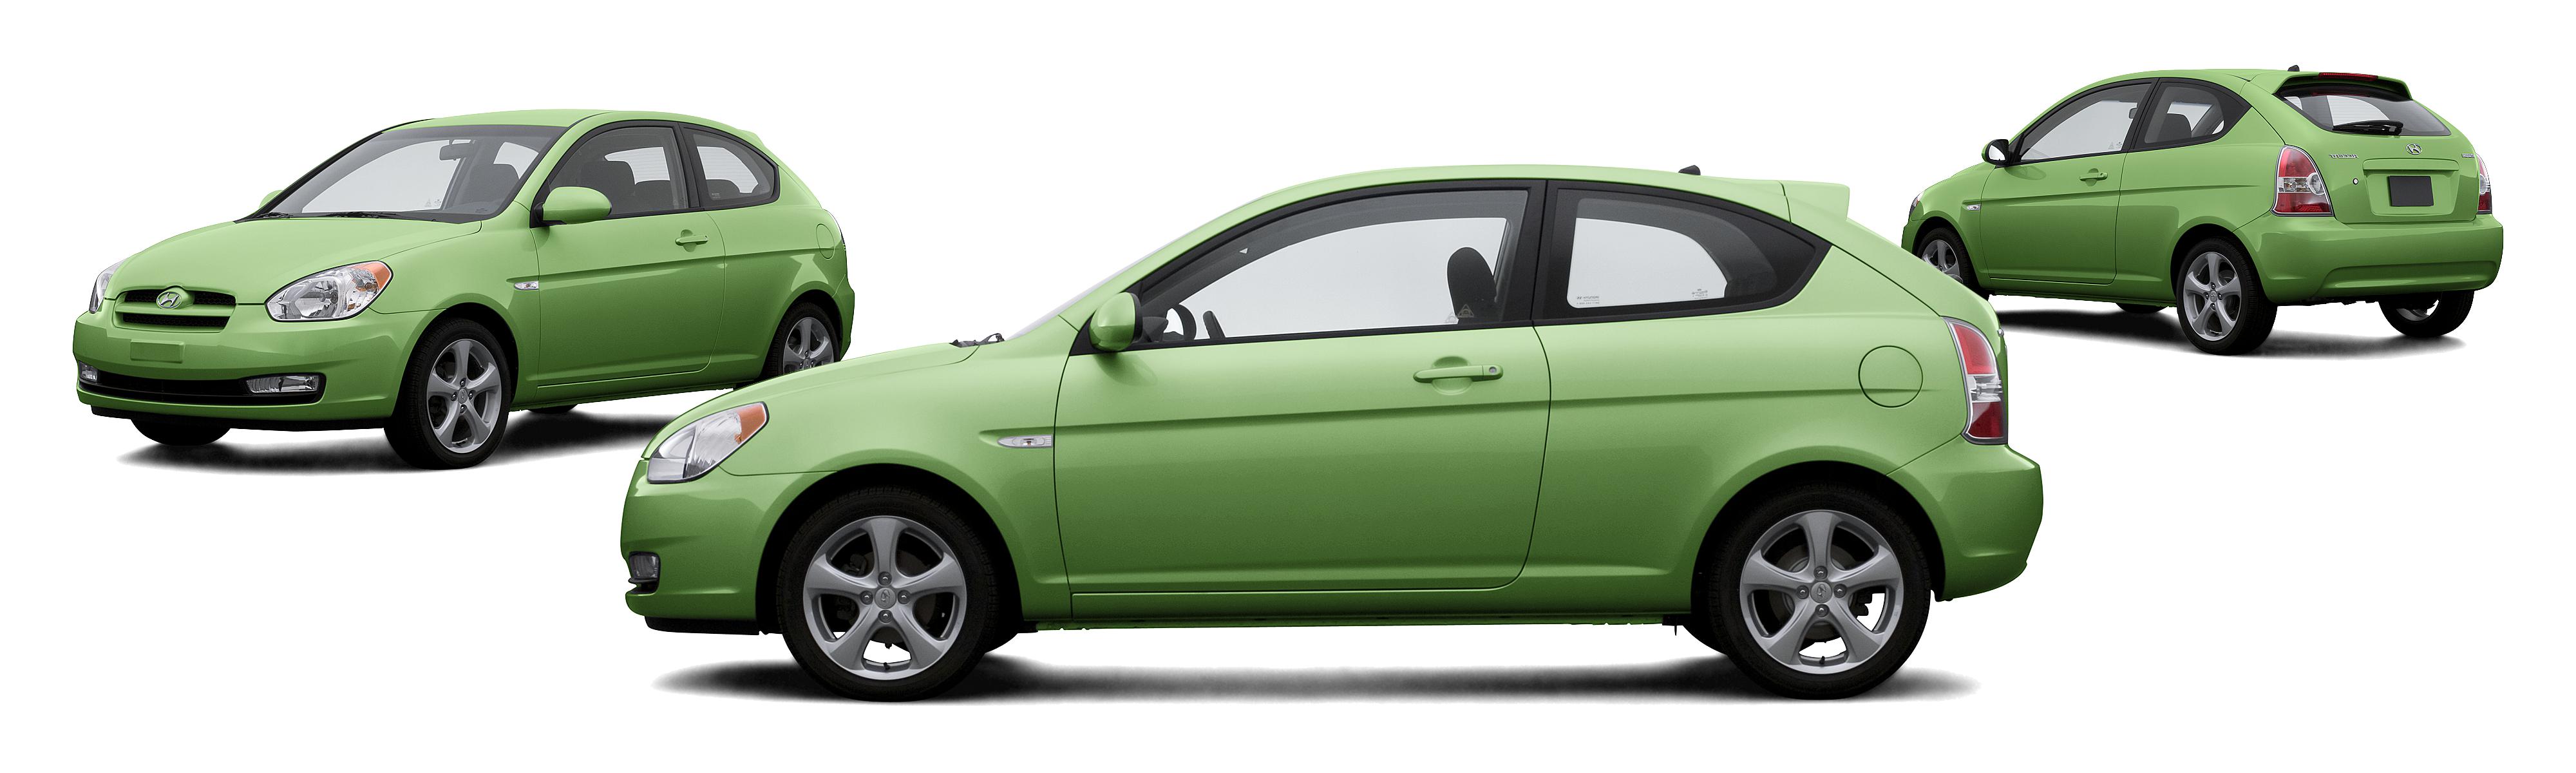 2007 Hyundai Accent SE 2dr Hatchback (1.6L I4 4A) - Research - GrooveCar